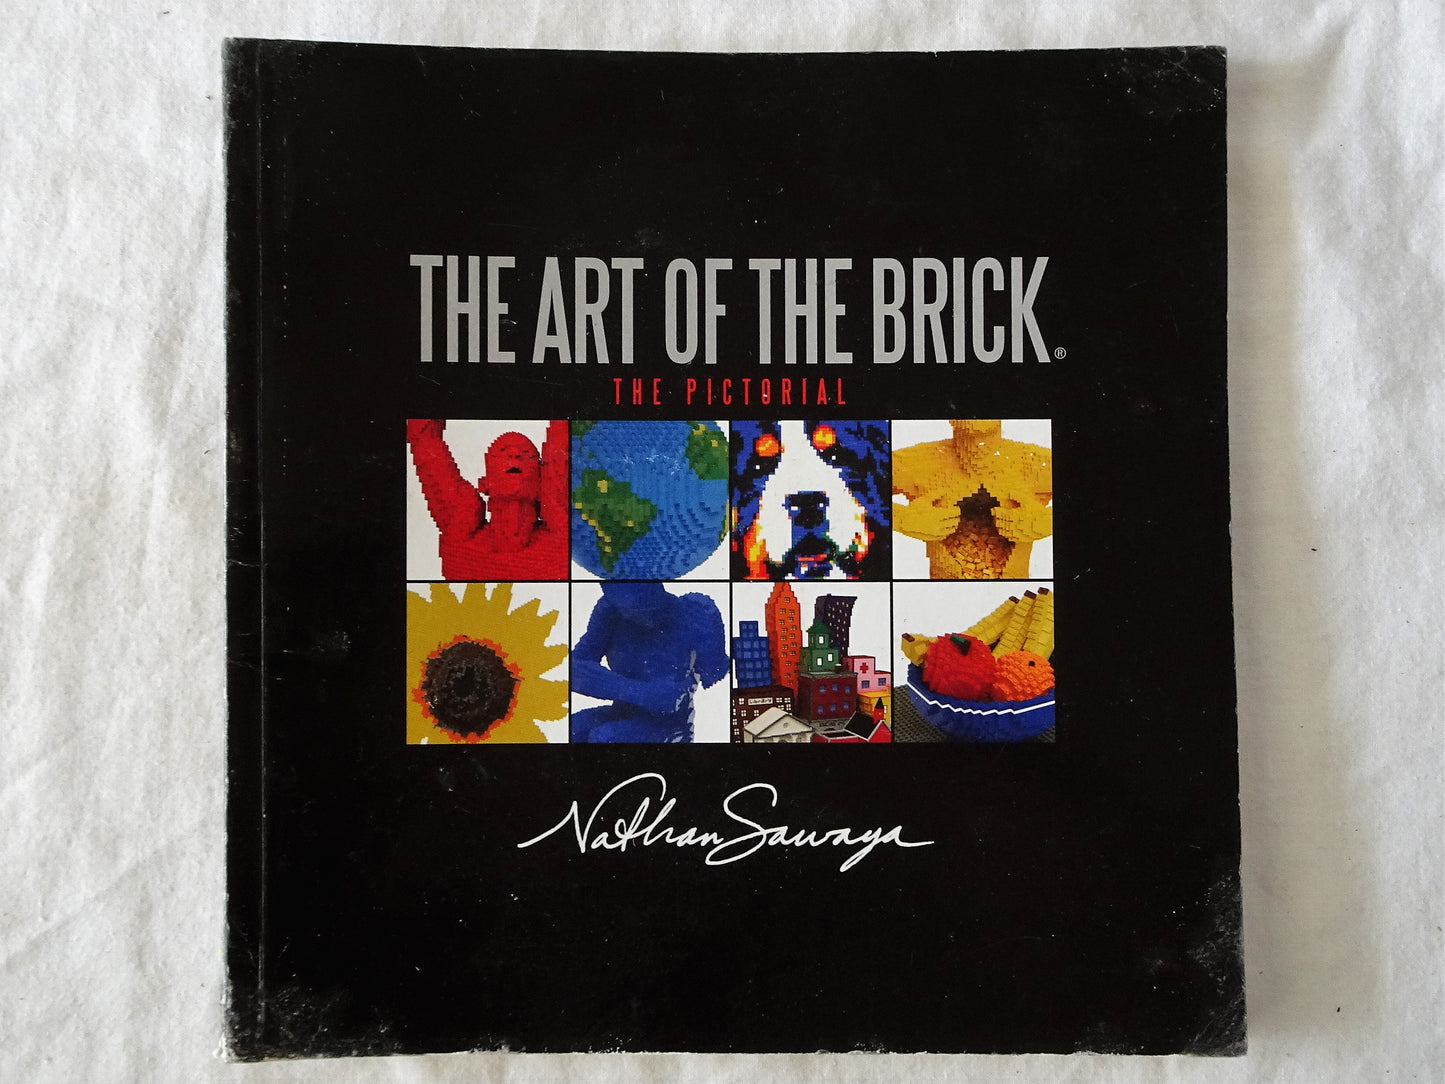 The Art Of The Brick by Nathan Sawaya